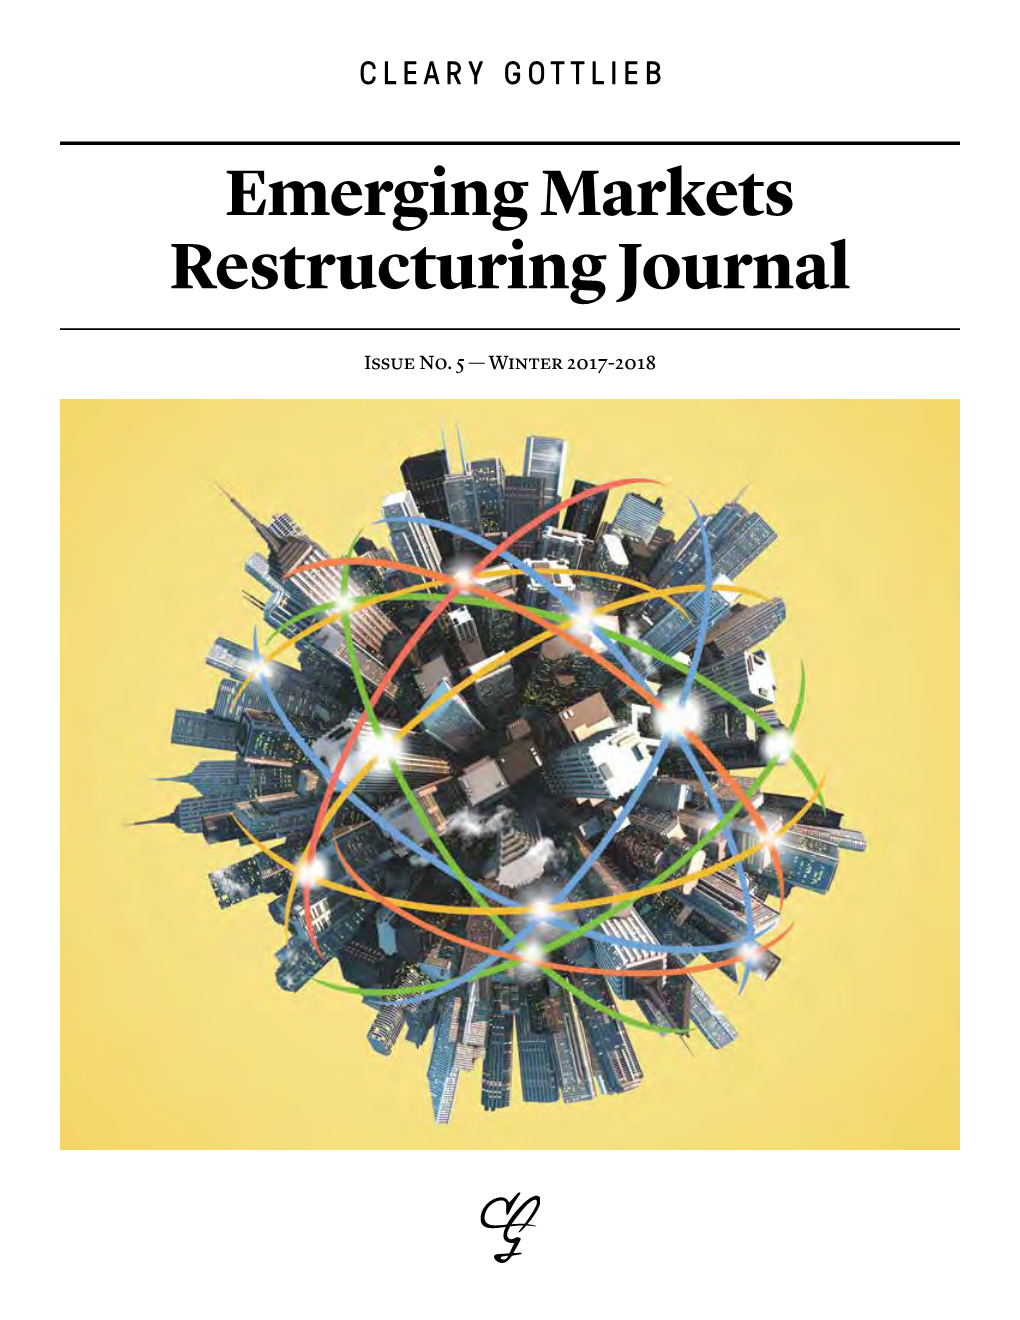 Emerging Markets Restructuring Journal, Issue No.5